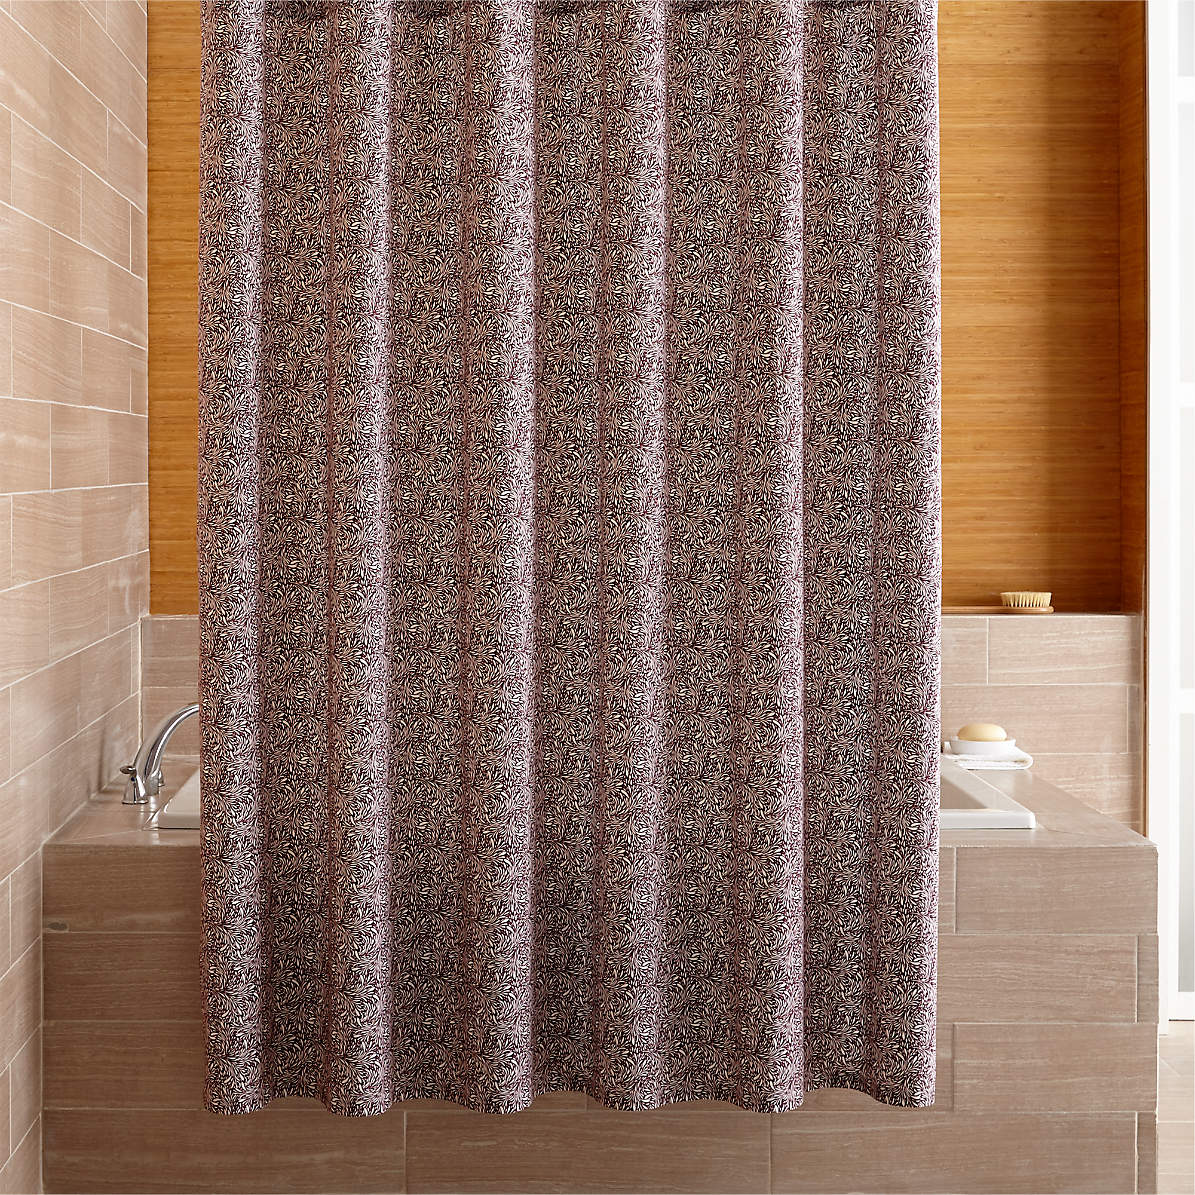 plum shower curtain